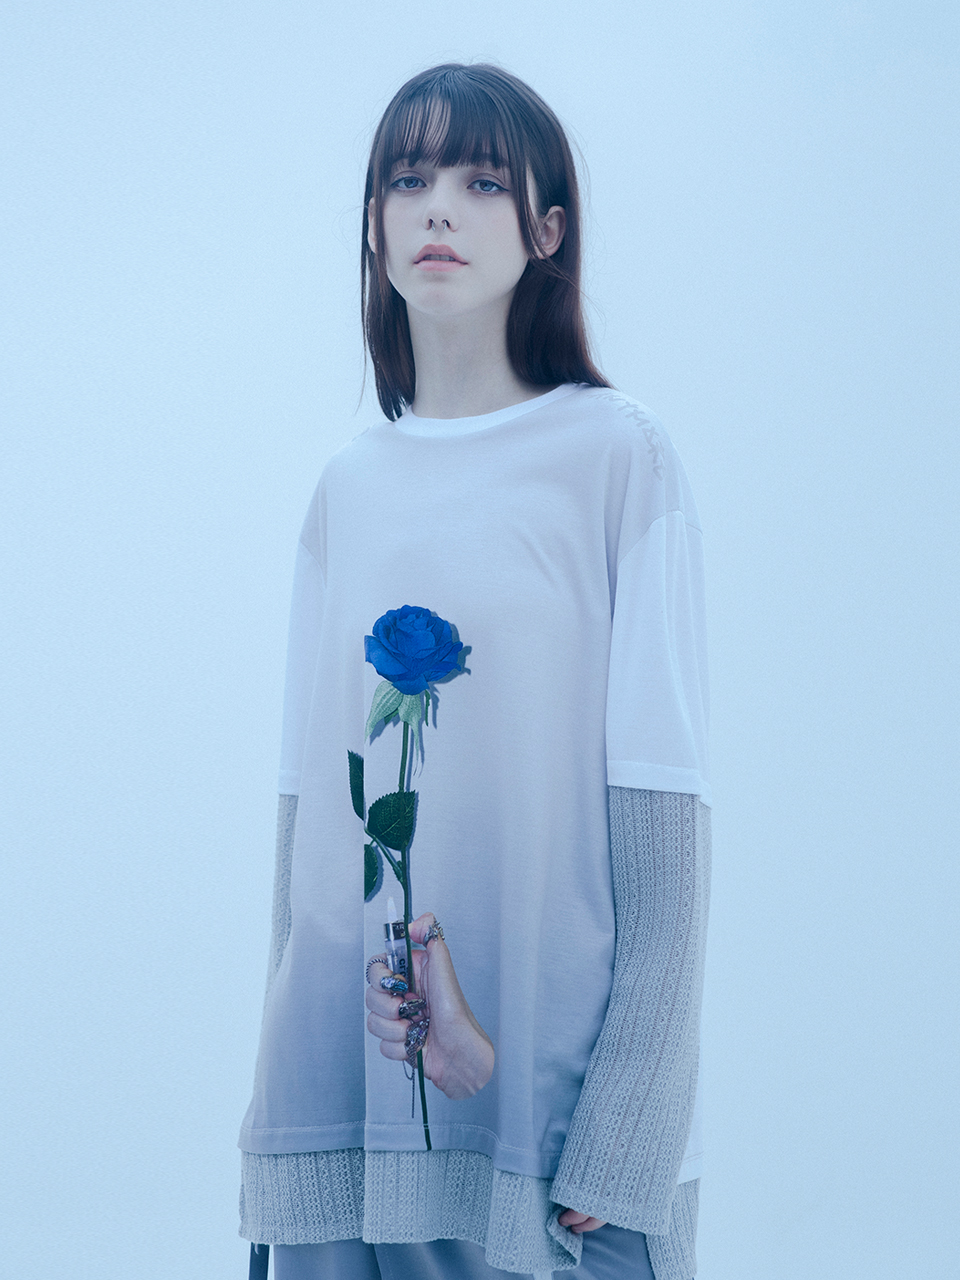 [Refurb] 0 6 blue rose layered t-shirt